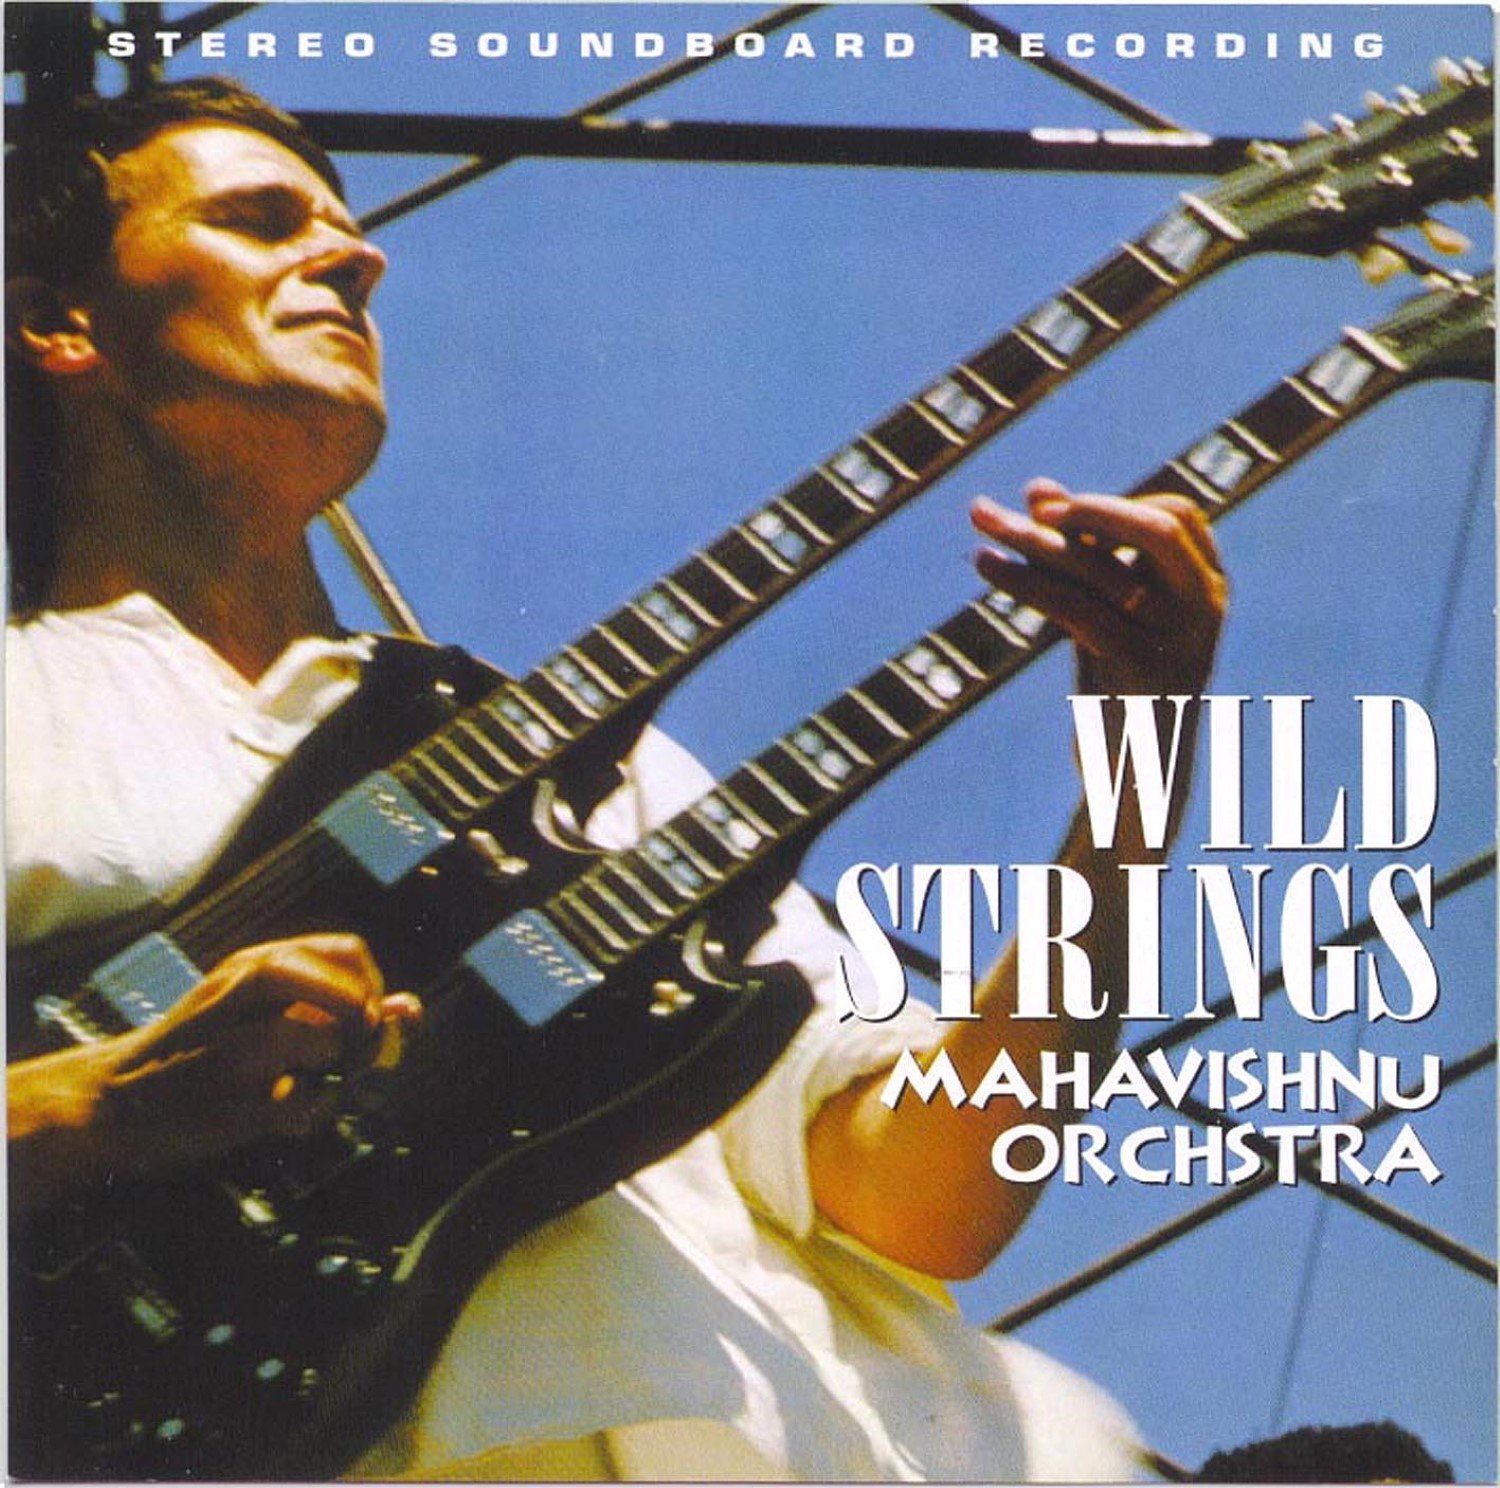 Mahavishnu orchestra. Маклафлин - Mahavishnu Orchestra. Mahavishnu Orchestra Wild Strings. МАХАВИШНУ 1972. John MCLAUGHLIN 1972.